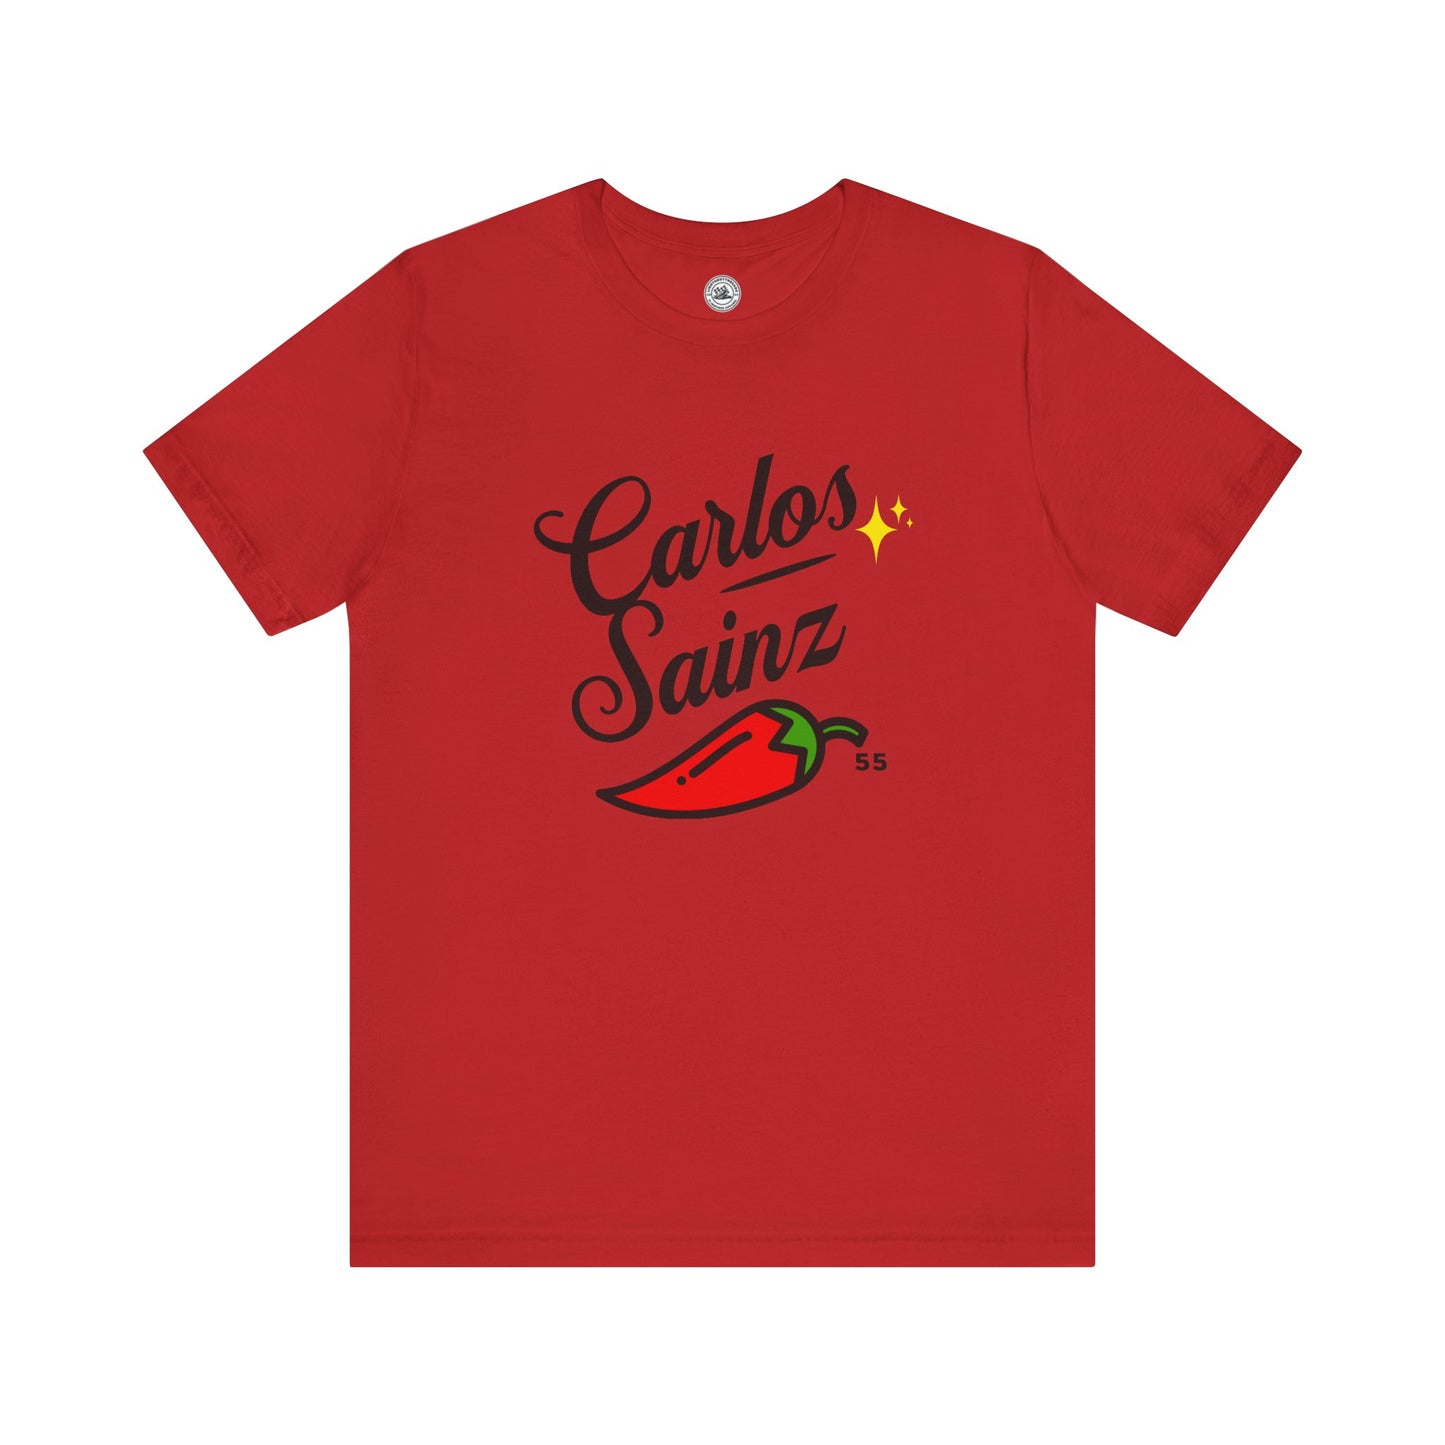 Carlos Sainz "Too Spicy" Unisex Tee